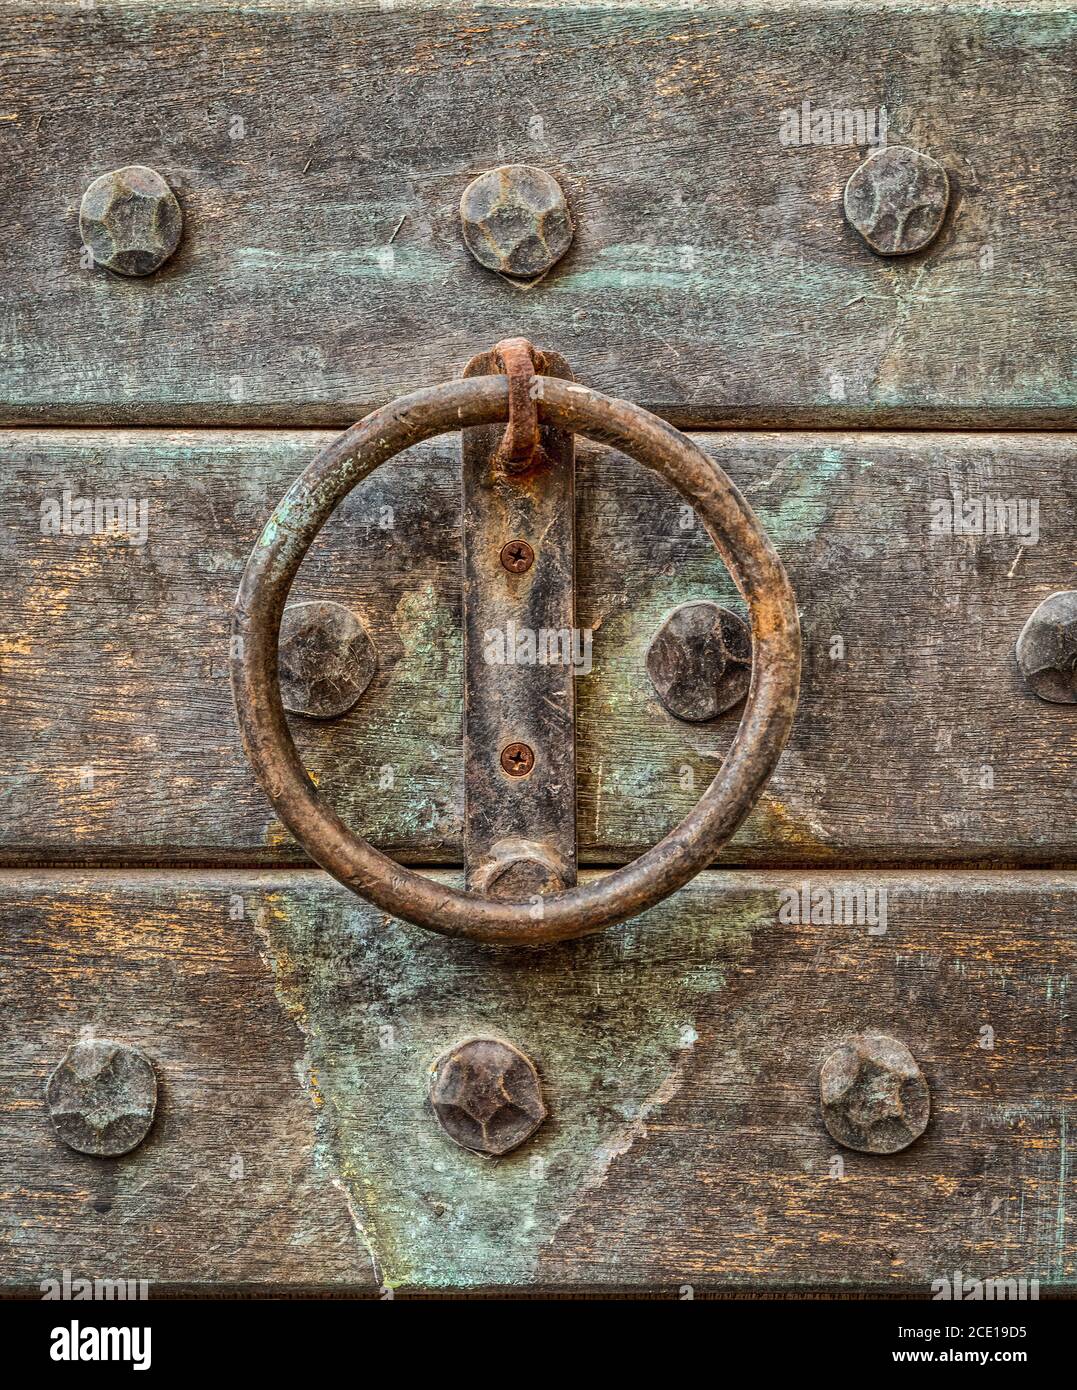 Vintage rusty rounded  iron door handle close up macro image with background of wooden door Stock Photo